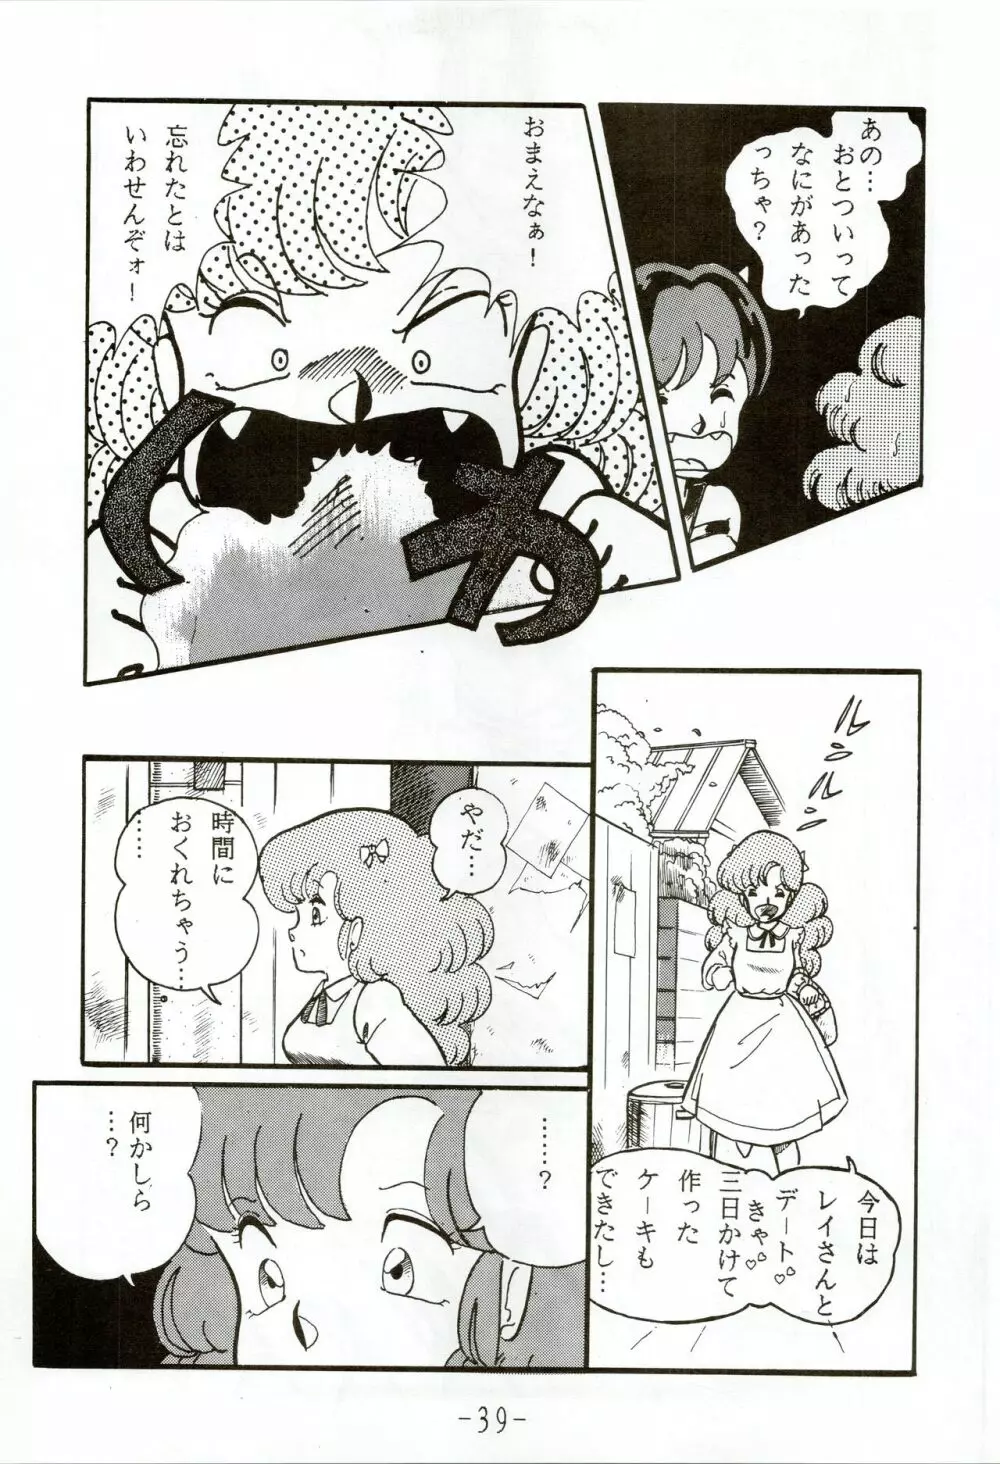 甲冑伝説 - page39